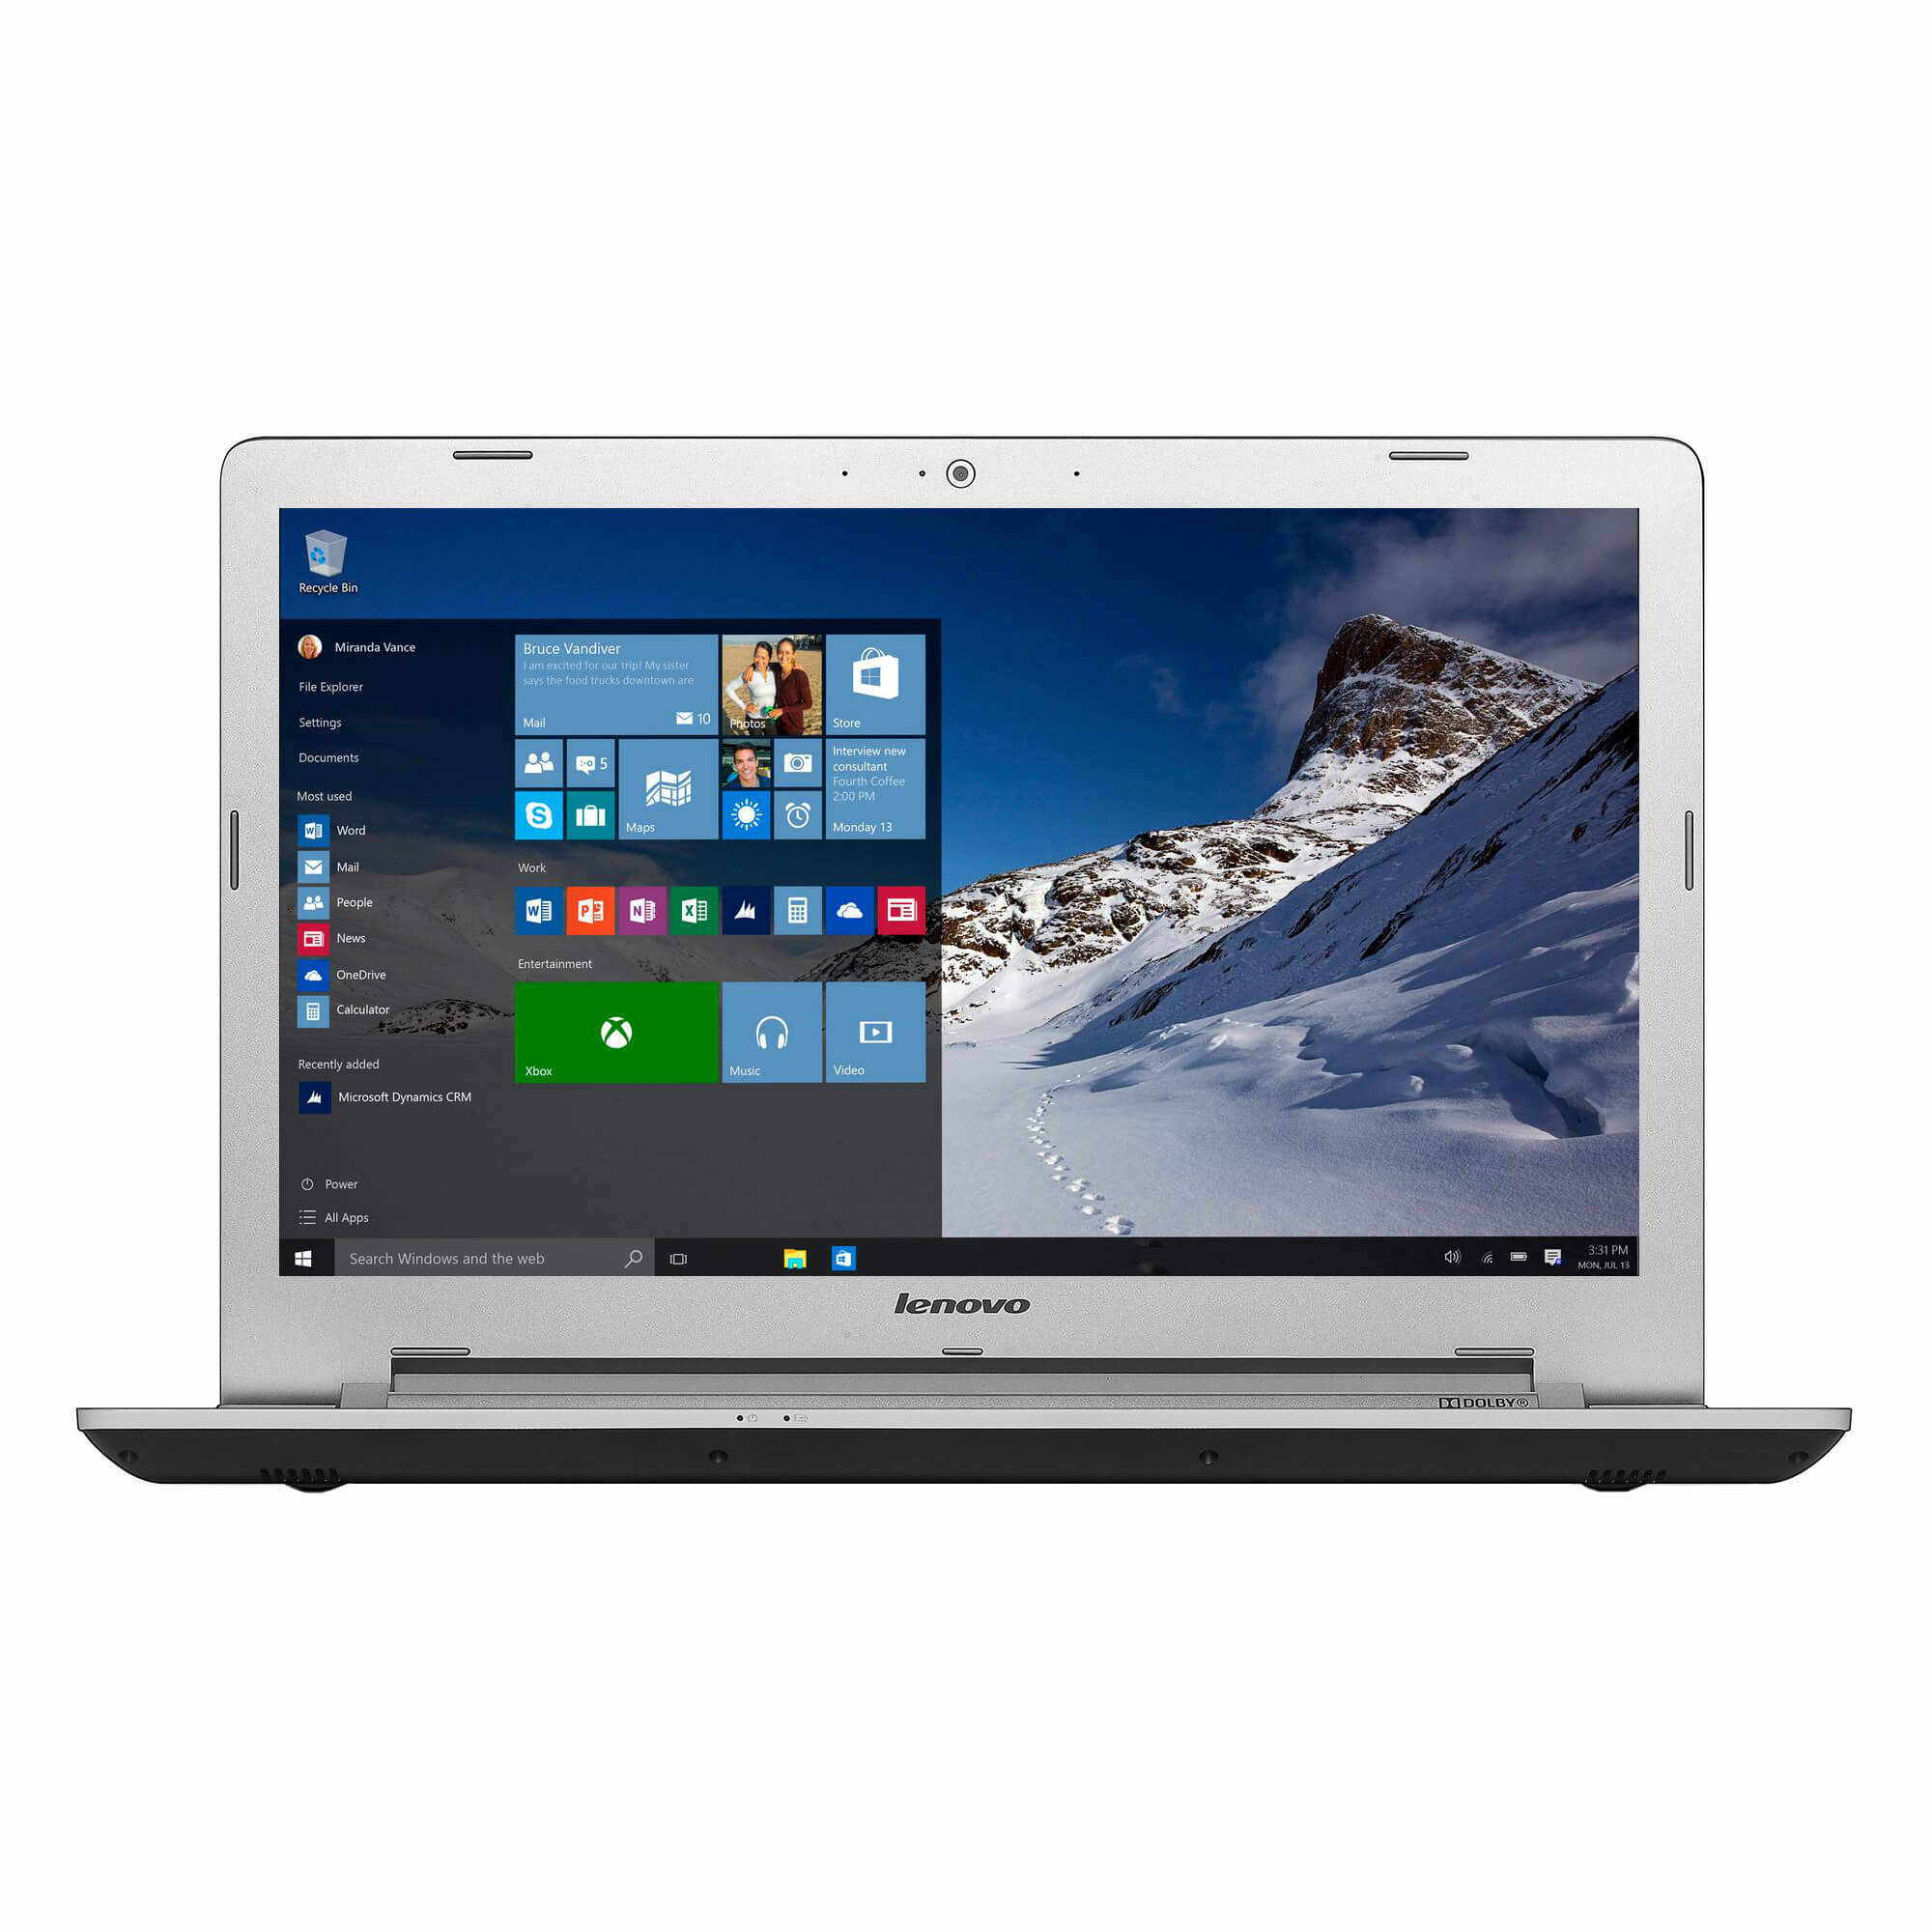 Laptop Lenovo IdeaPad Z51-70, Intel Core i7-5500U, 4GB DDR3, SSHD 1TB + 8GB, AMD Radeon R9 M375 4GB, Windows 10